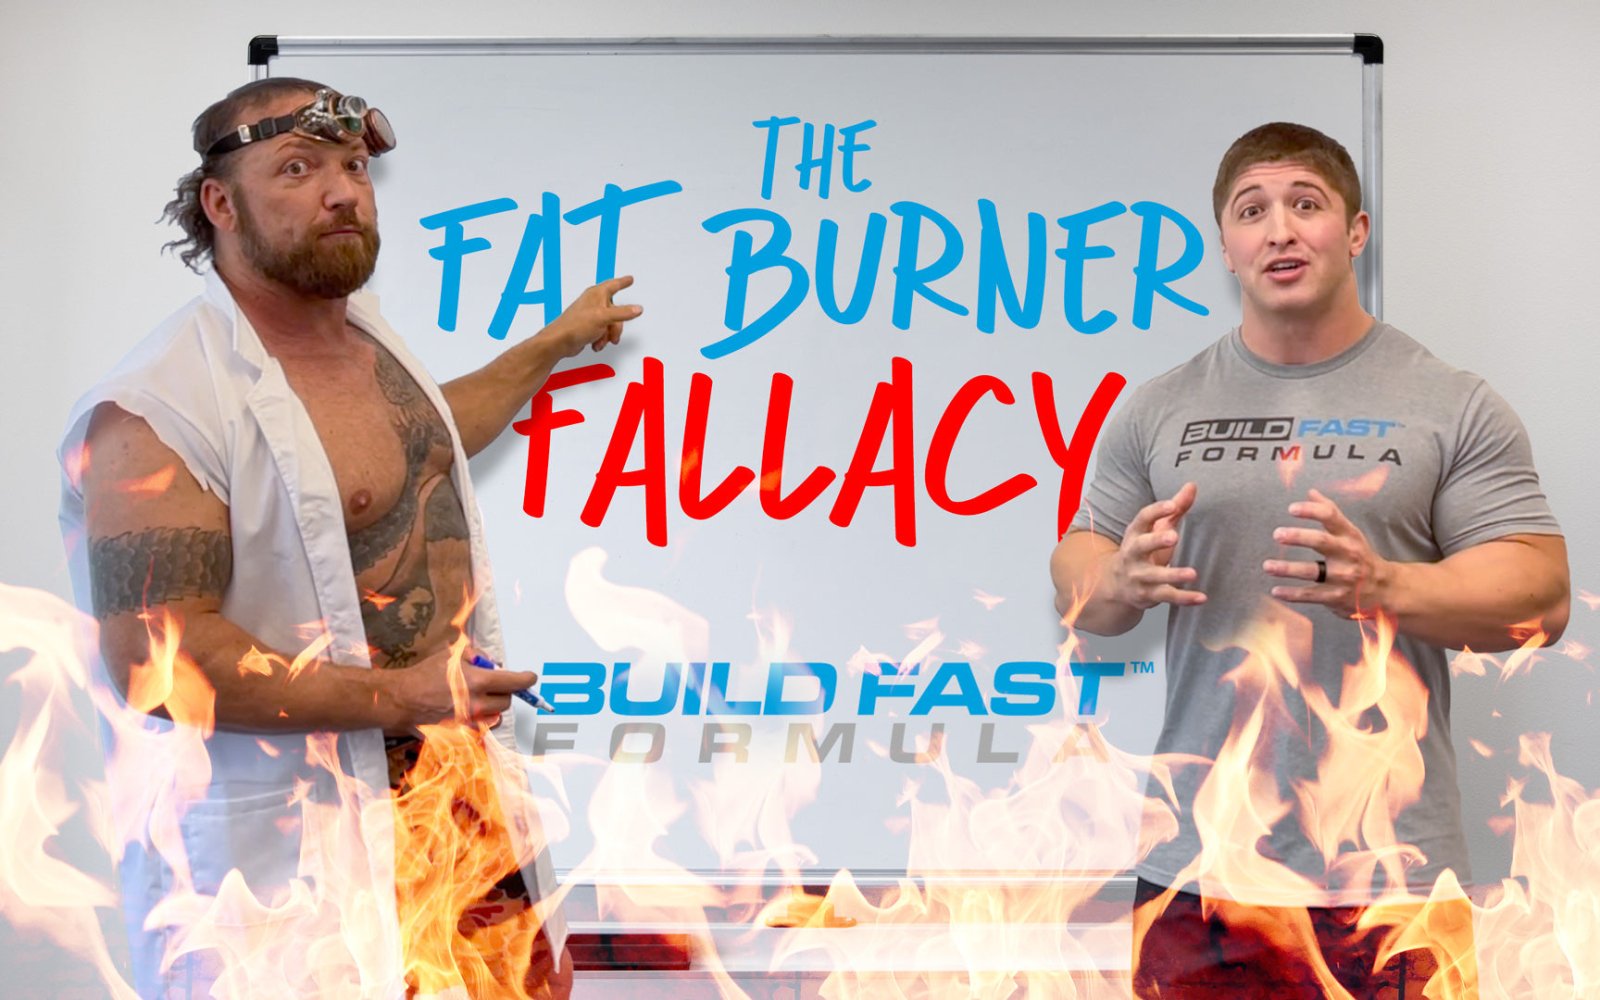 The Fat Burner Fallacy - BuildFastFormula